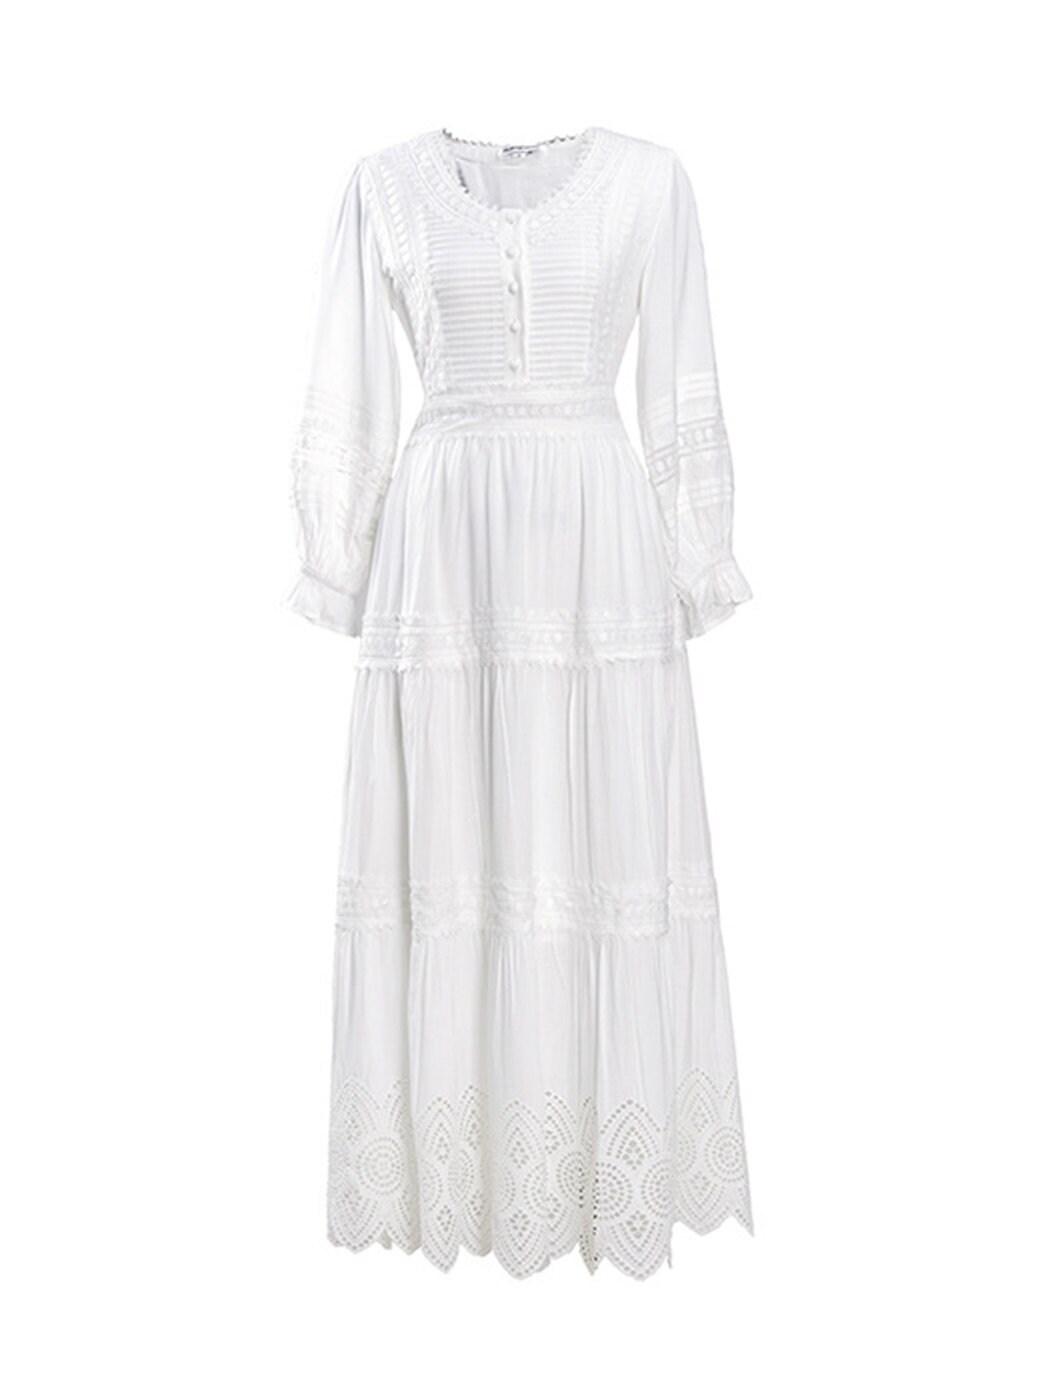 Women's White Cottagecore Dress Cotton Boho Dress - Etsy